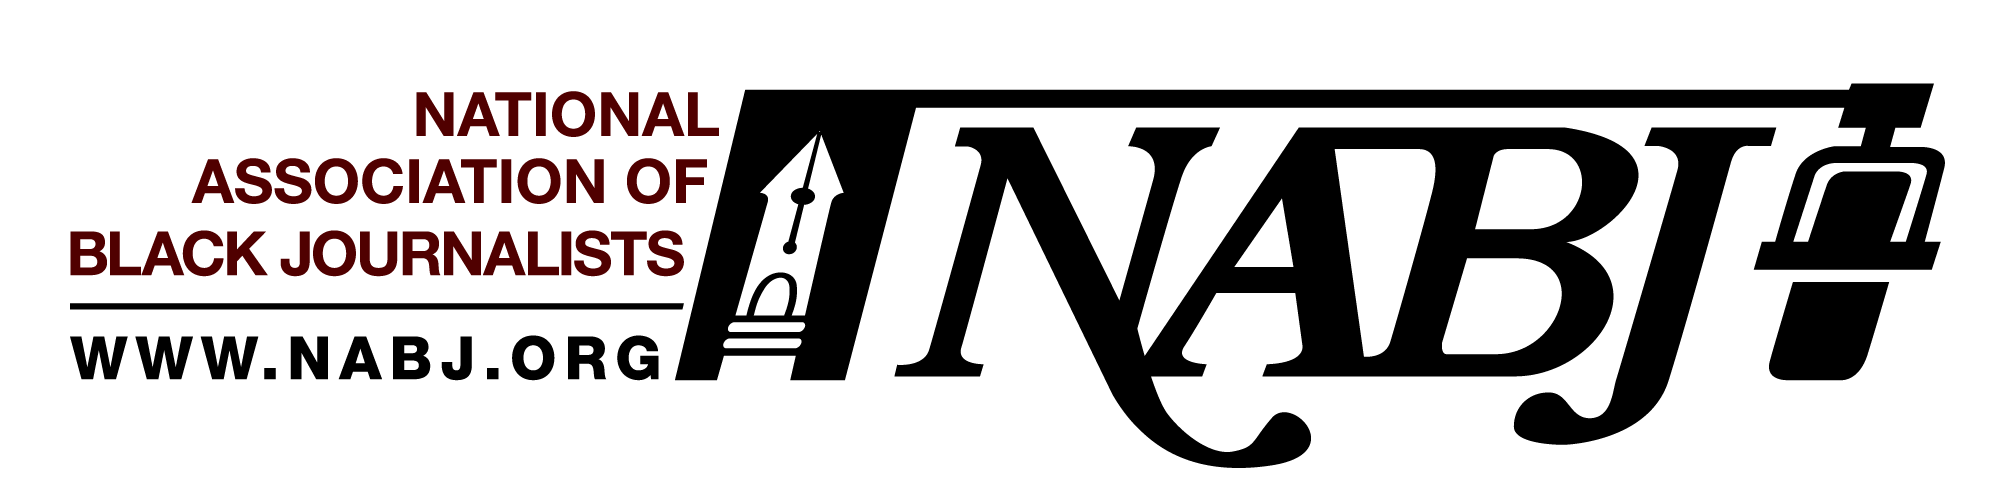 National Association of Black Journalists logo